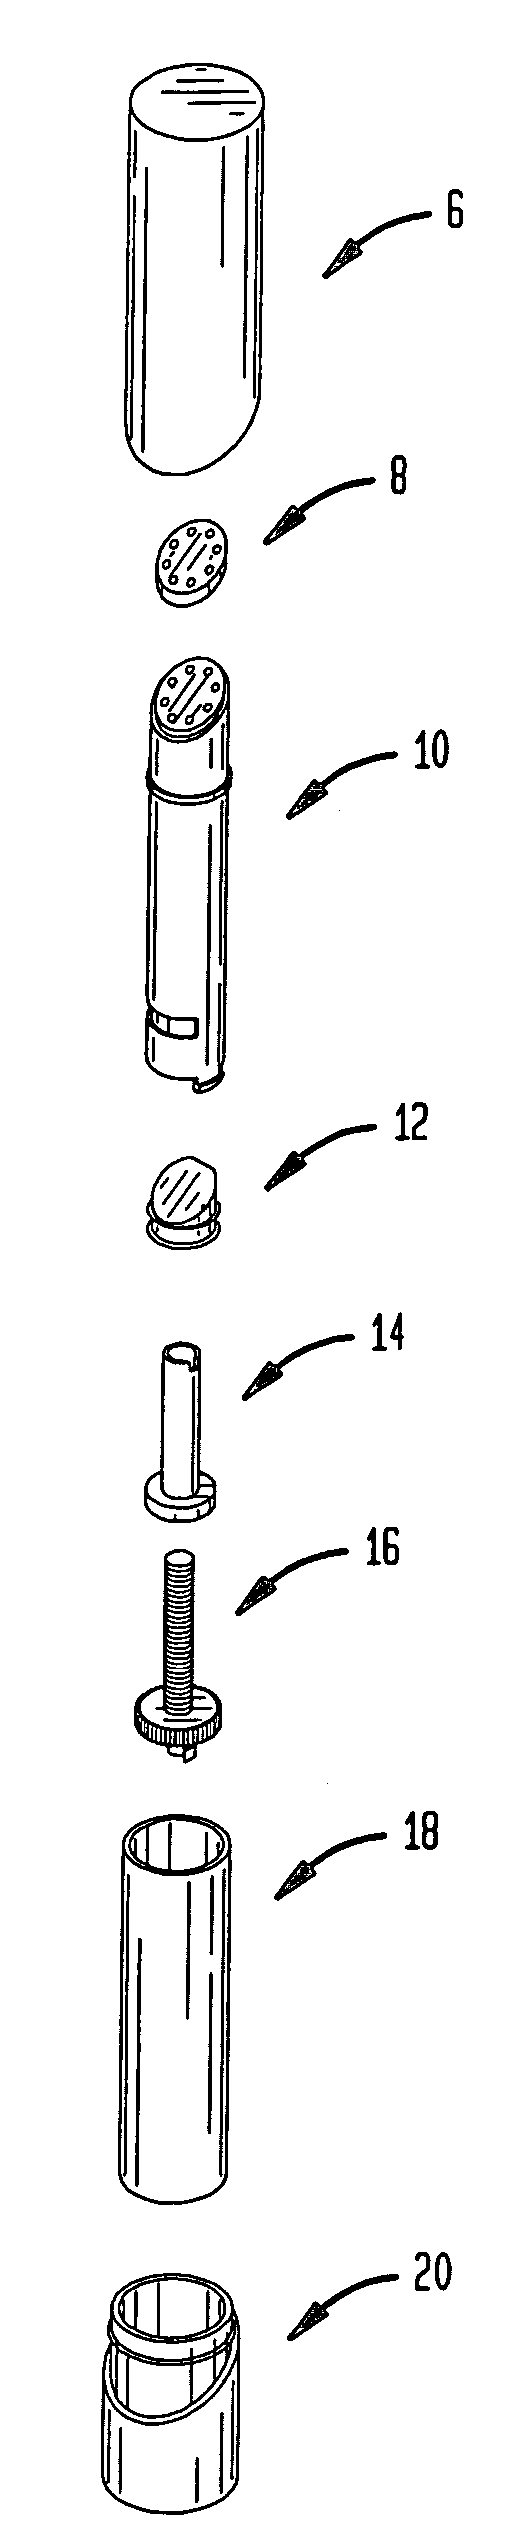 Dispenser for fluid materials